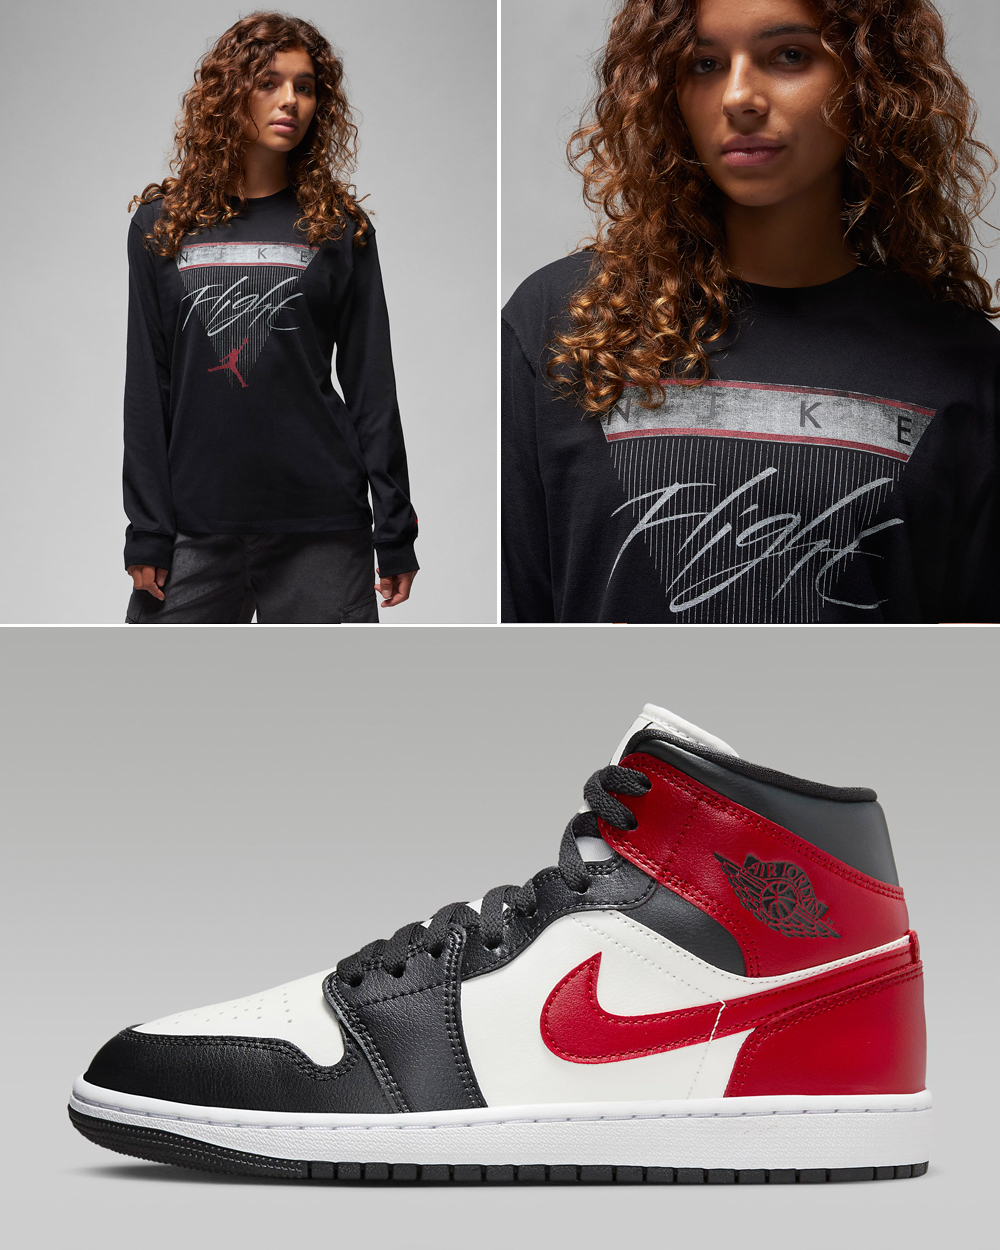 Air-Jordan-1-Mid-Womens-Sail-Off-Noir-Gym-Red-Long-Sleeve-T-Shirt-Matching-Outfit